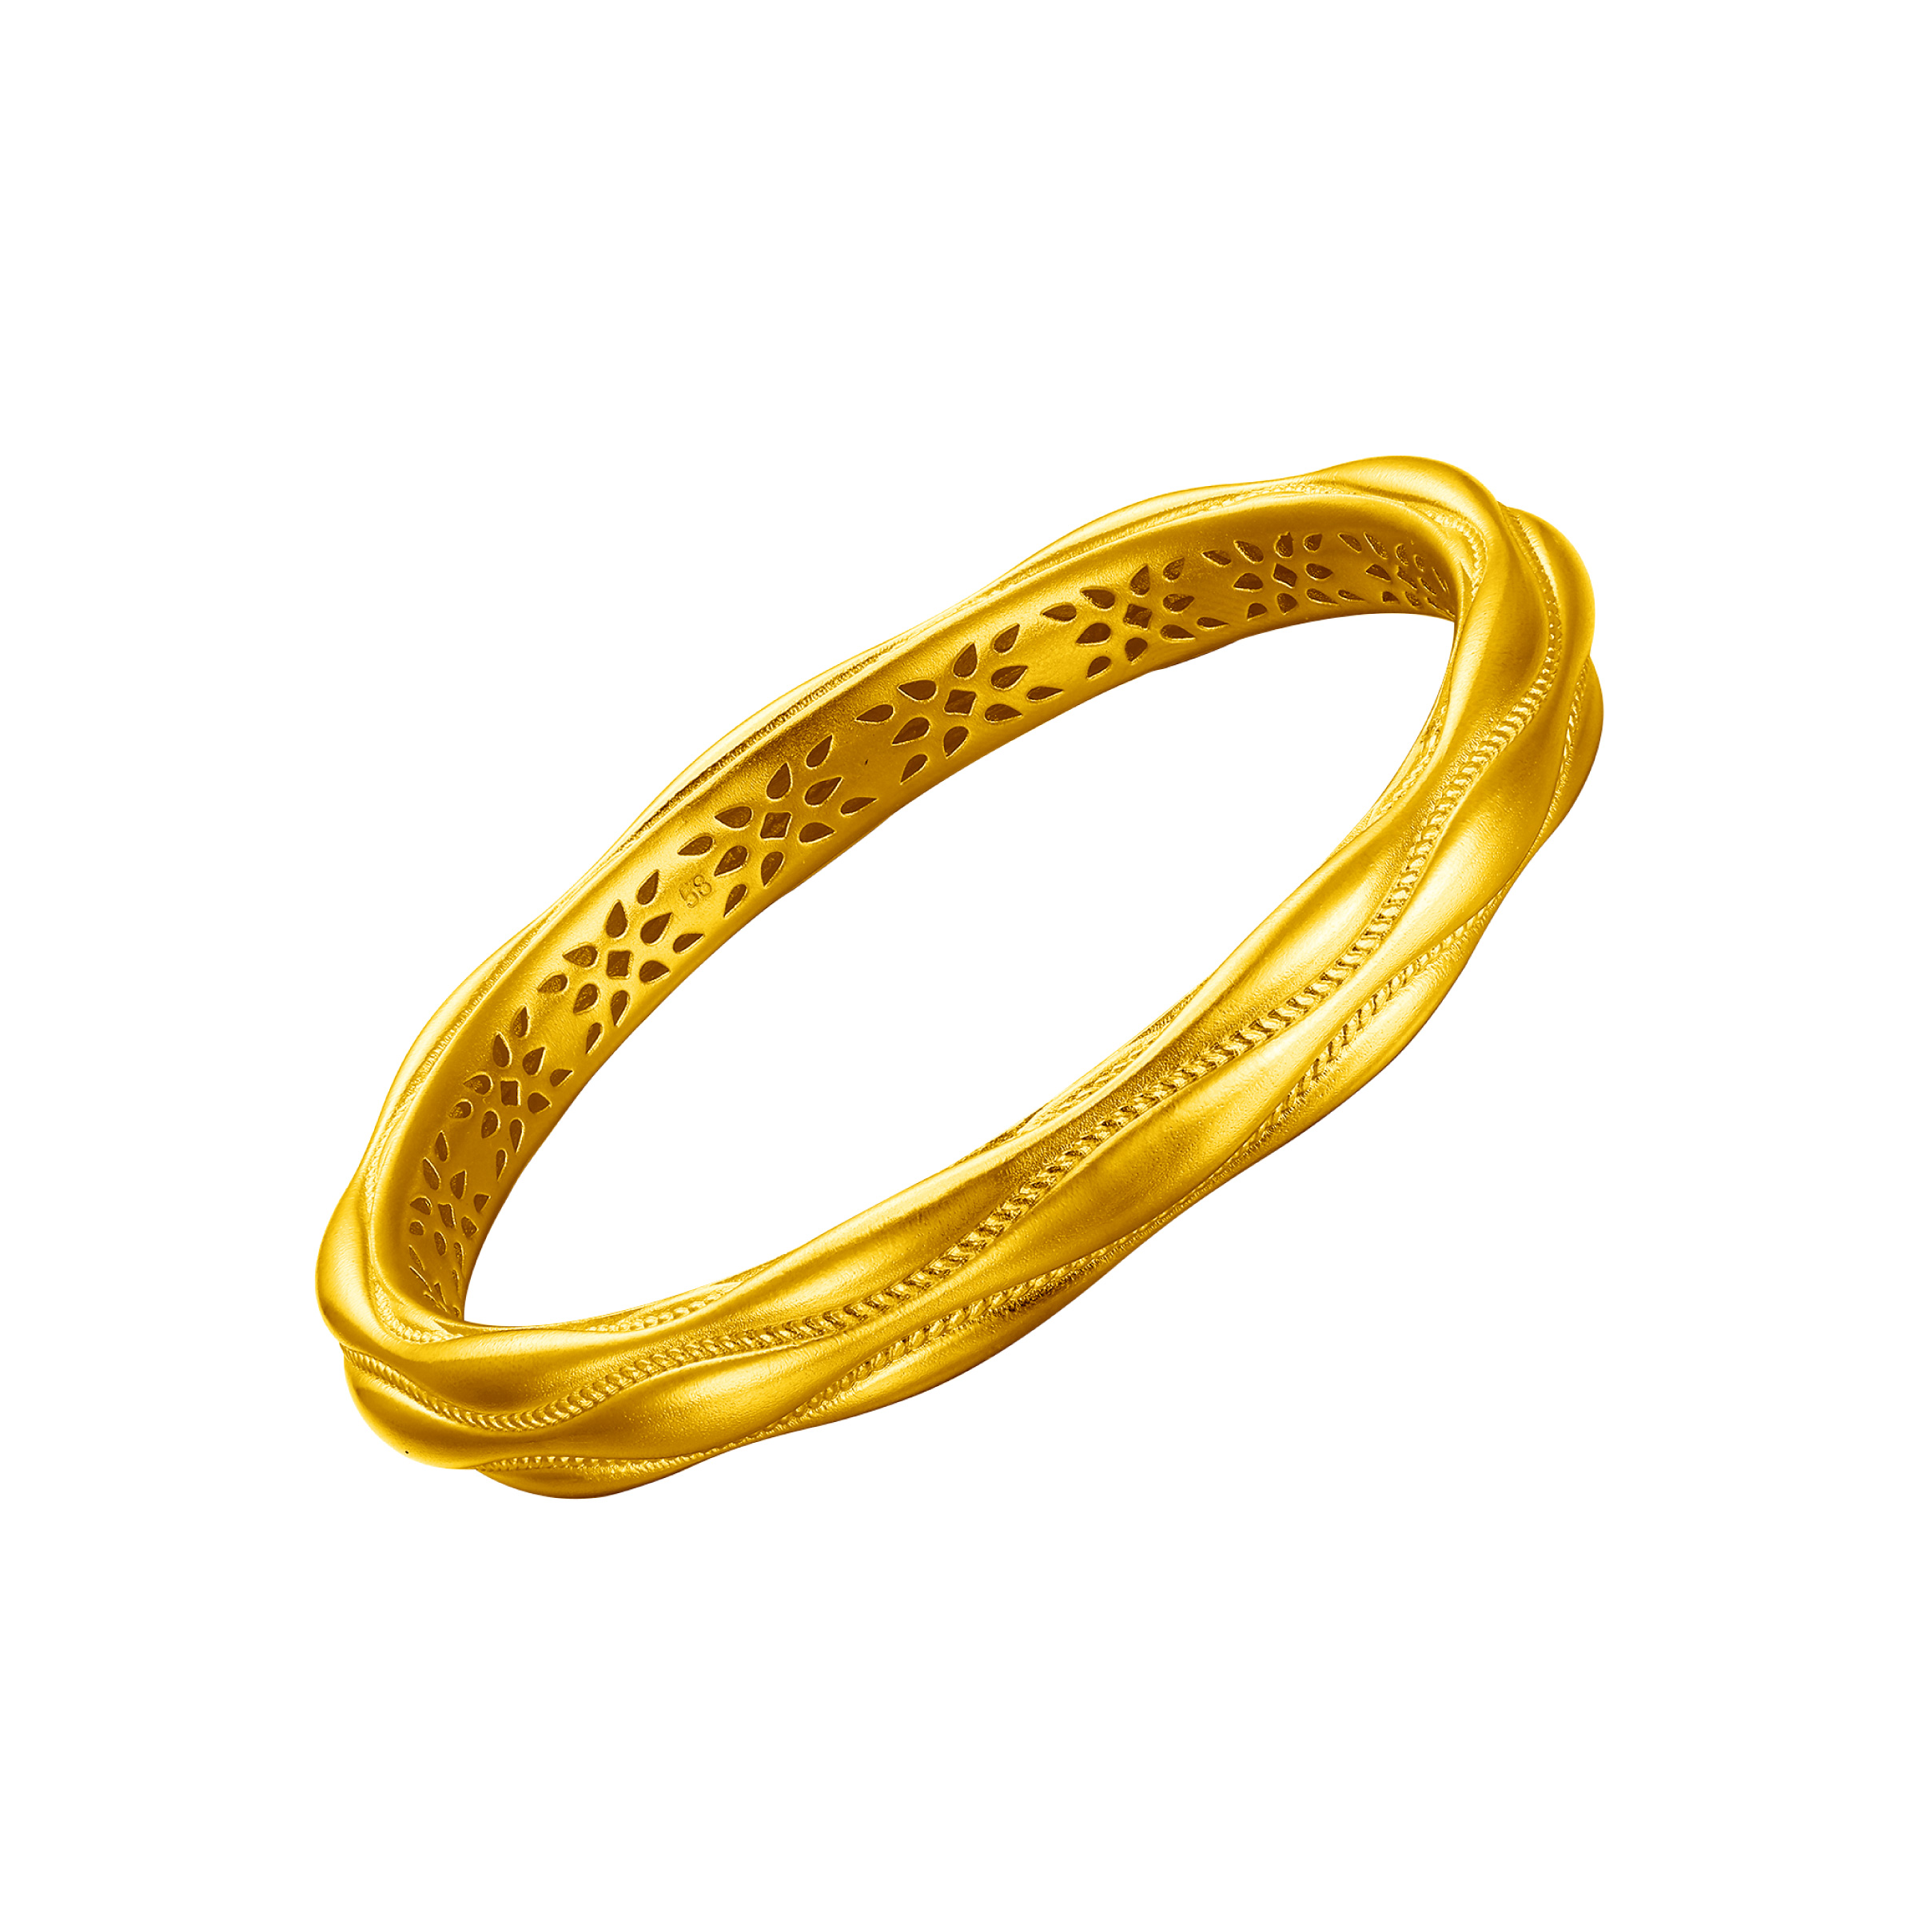 Antique Gold「尚福」Gold Bracelet 